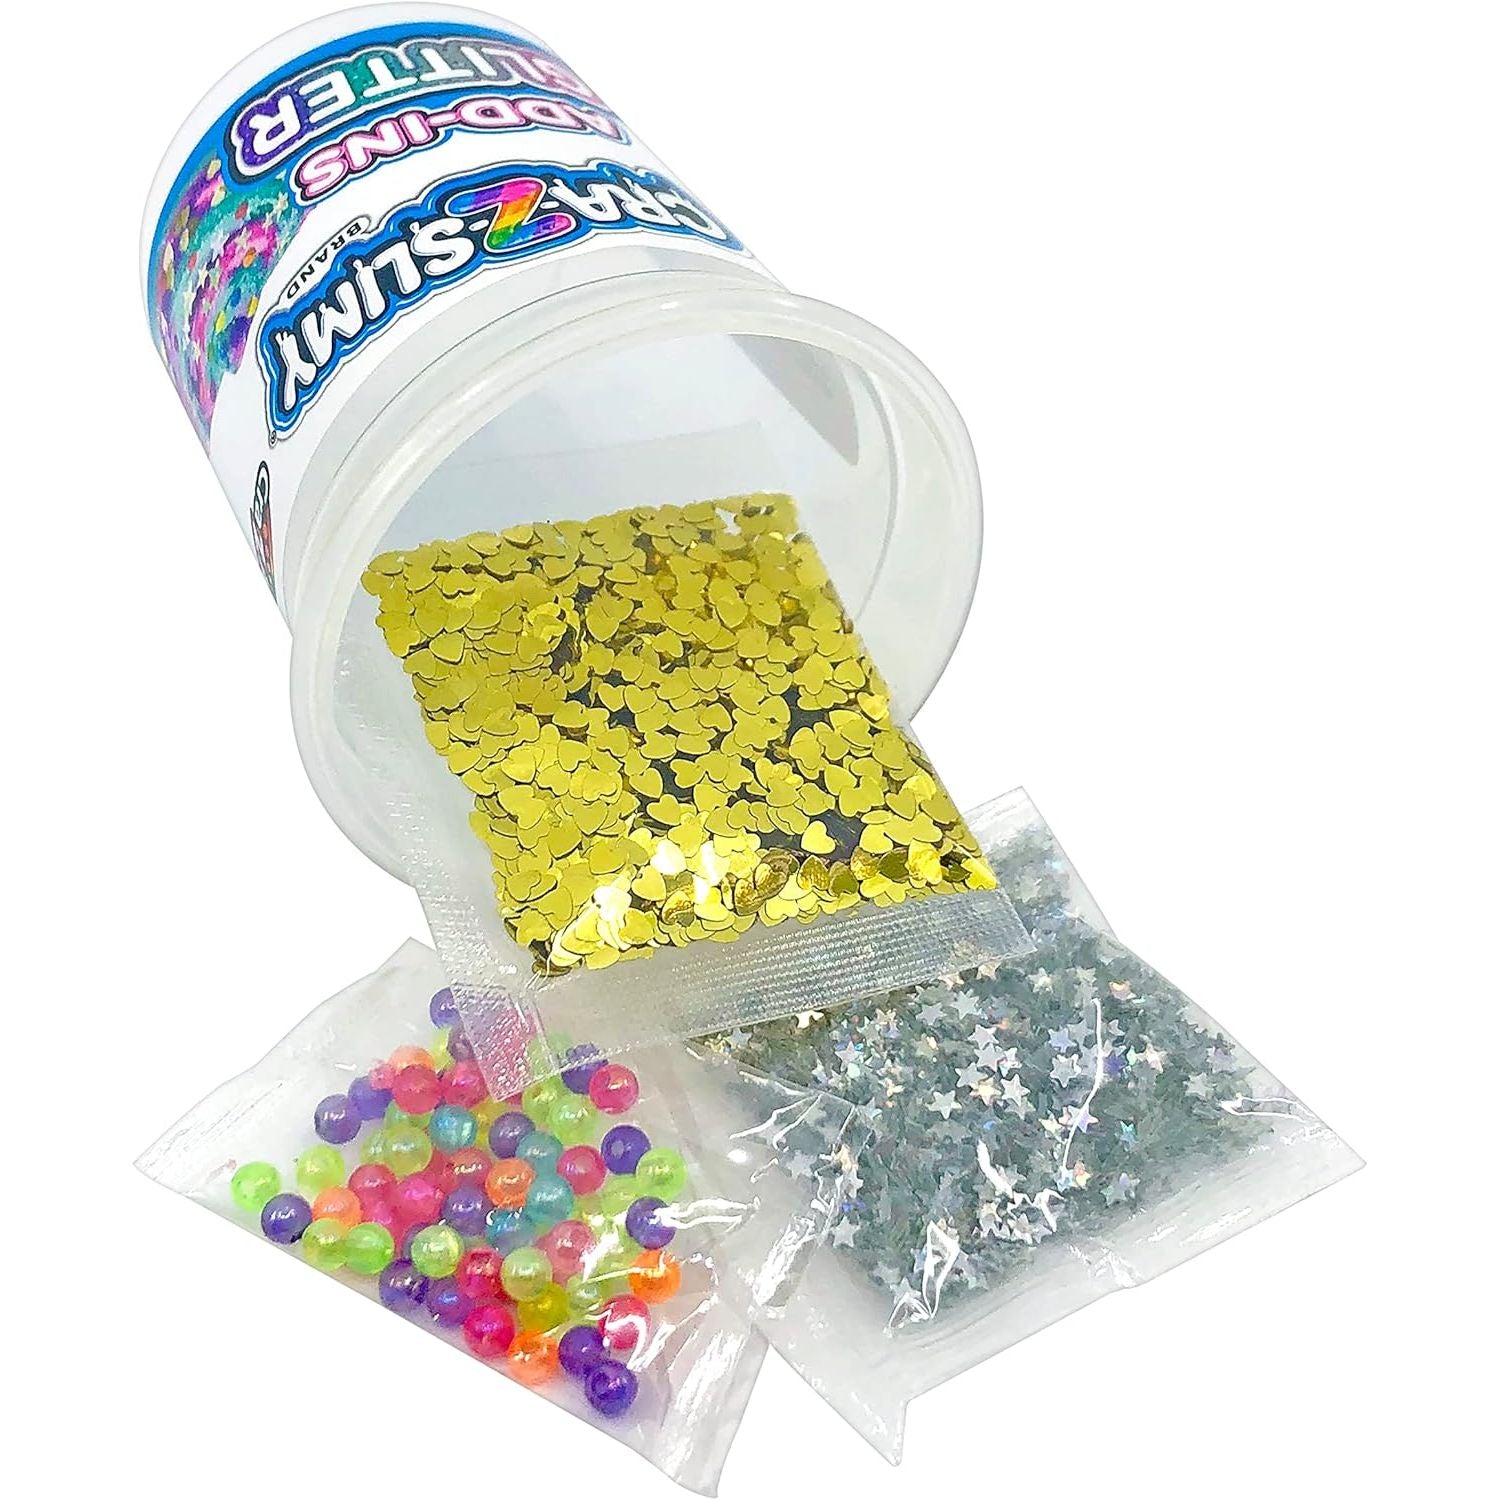 Cra-Z-Slimy 4-Pack Glitter Slime - 60021INT